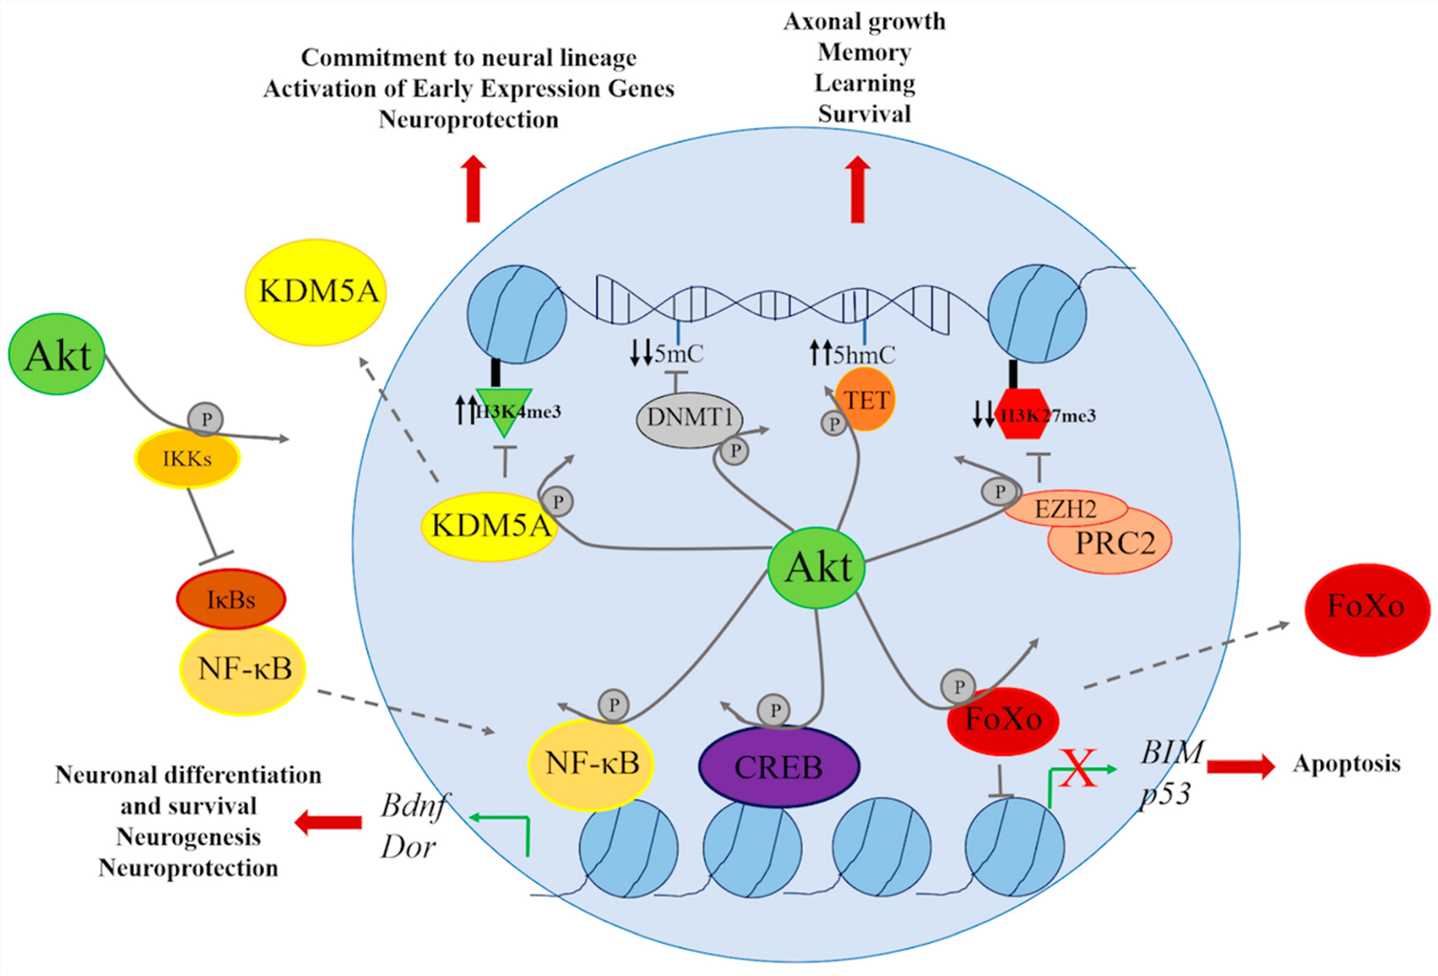 AKT phosphorylates several transcription factors